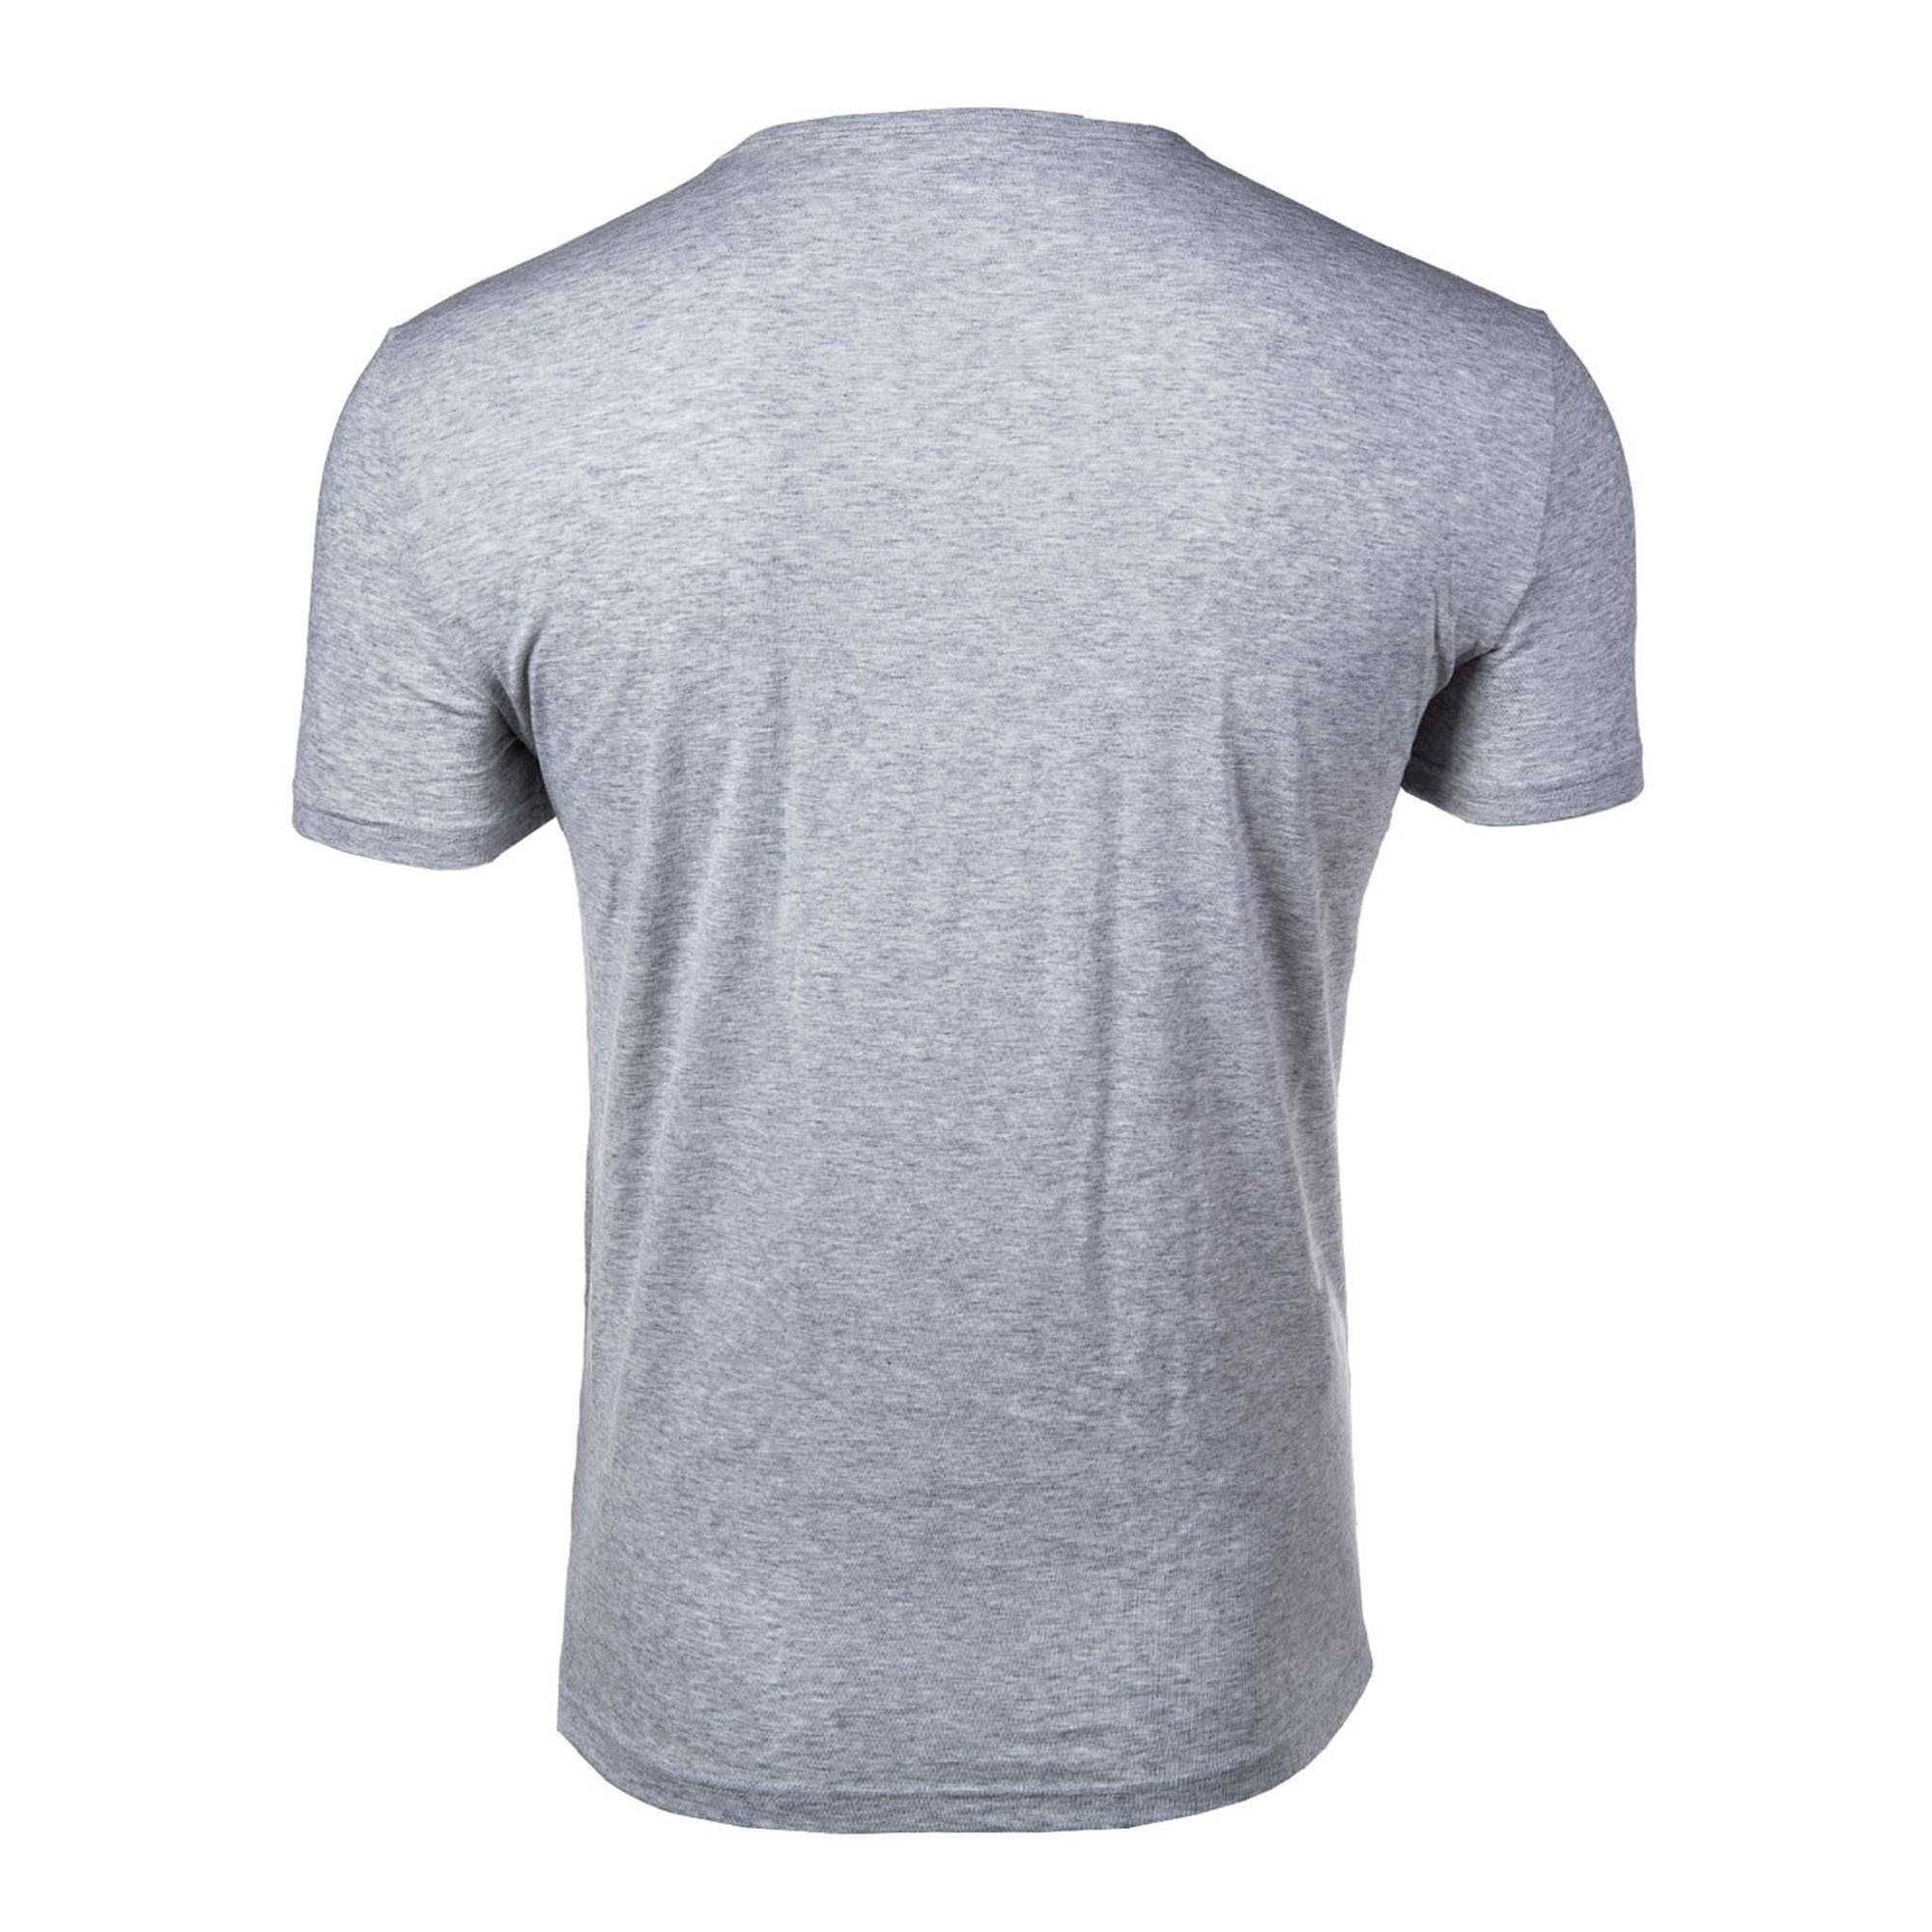 2er Pack V-Neck, - Armani Emporio V-Ausschnitt Herren Schwarz/Grau T-Shirt T-Shirt